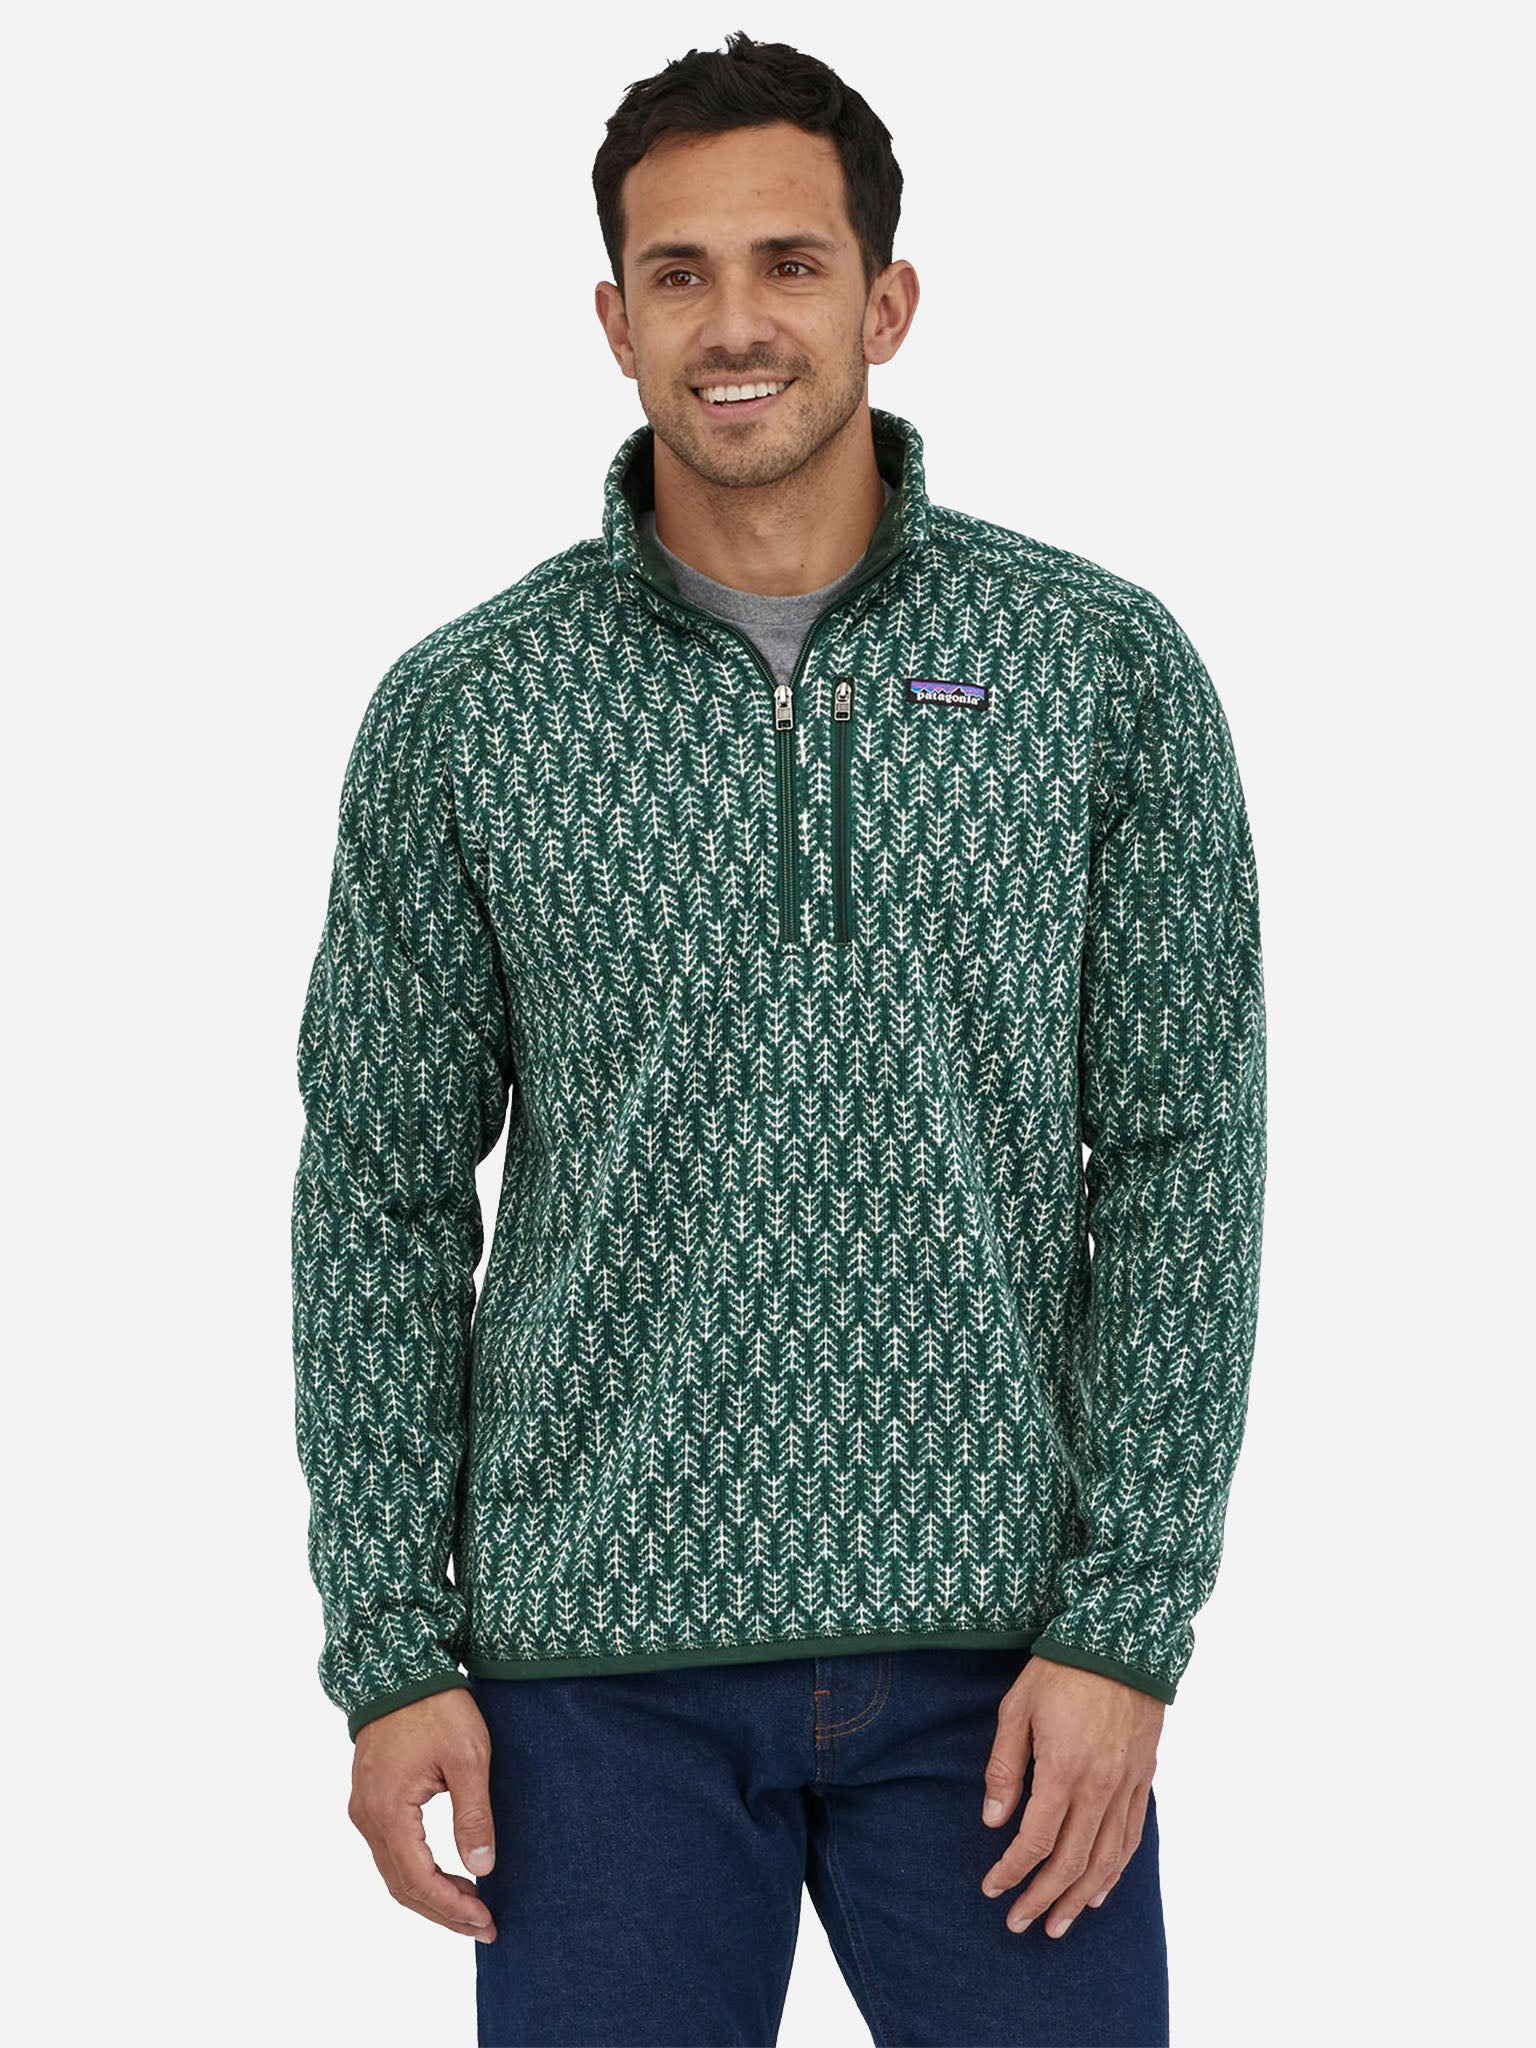 Patagonia Men's Better Sweater Quarter-Zip –